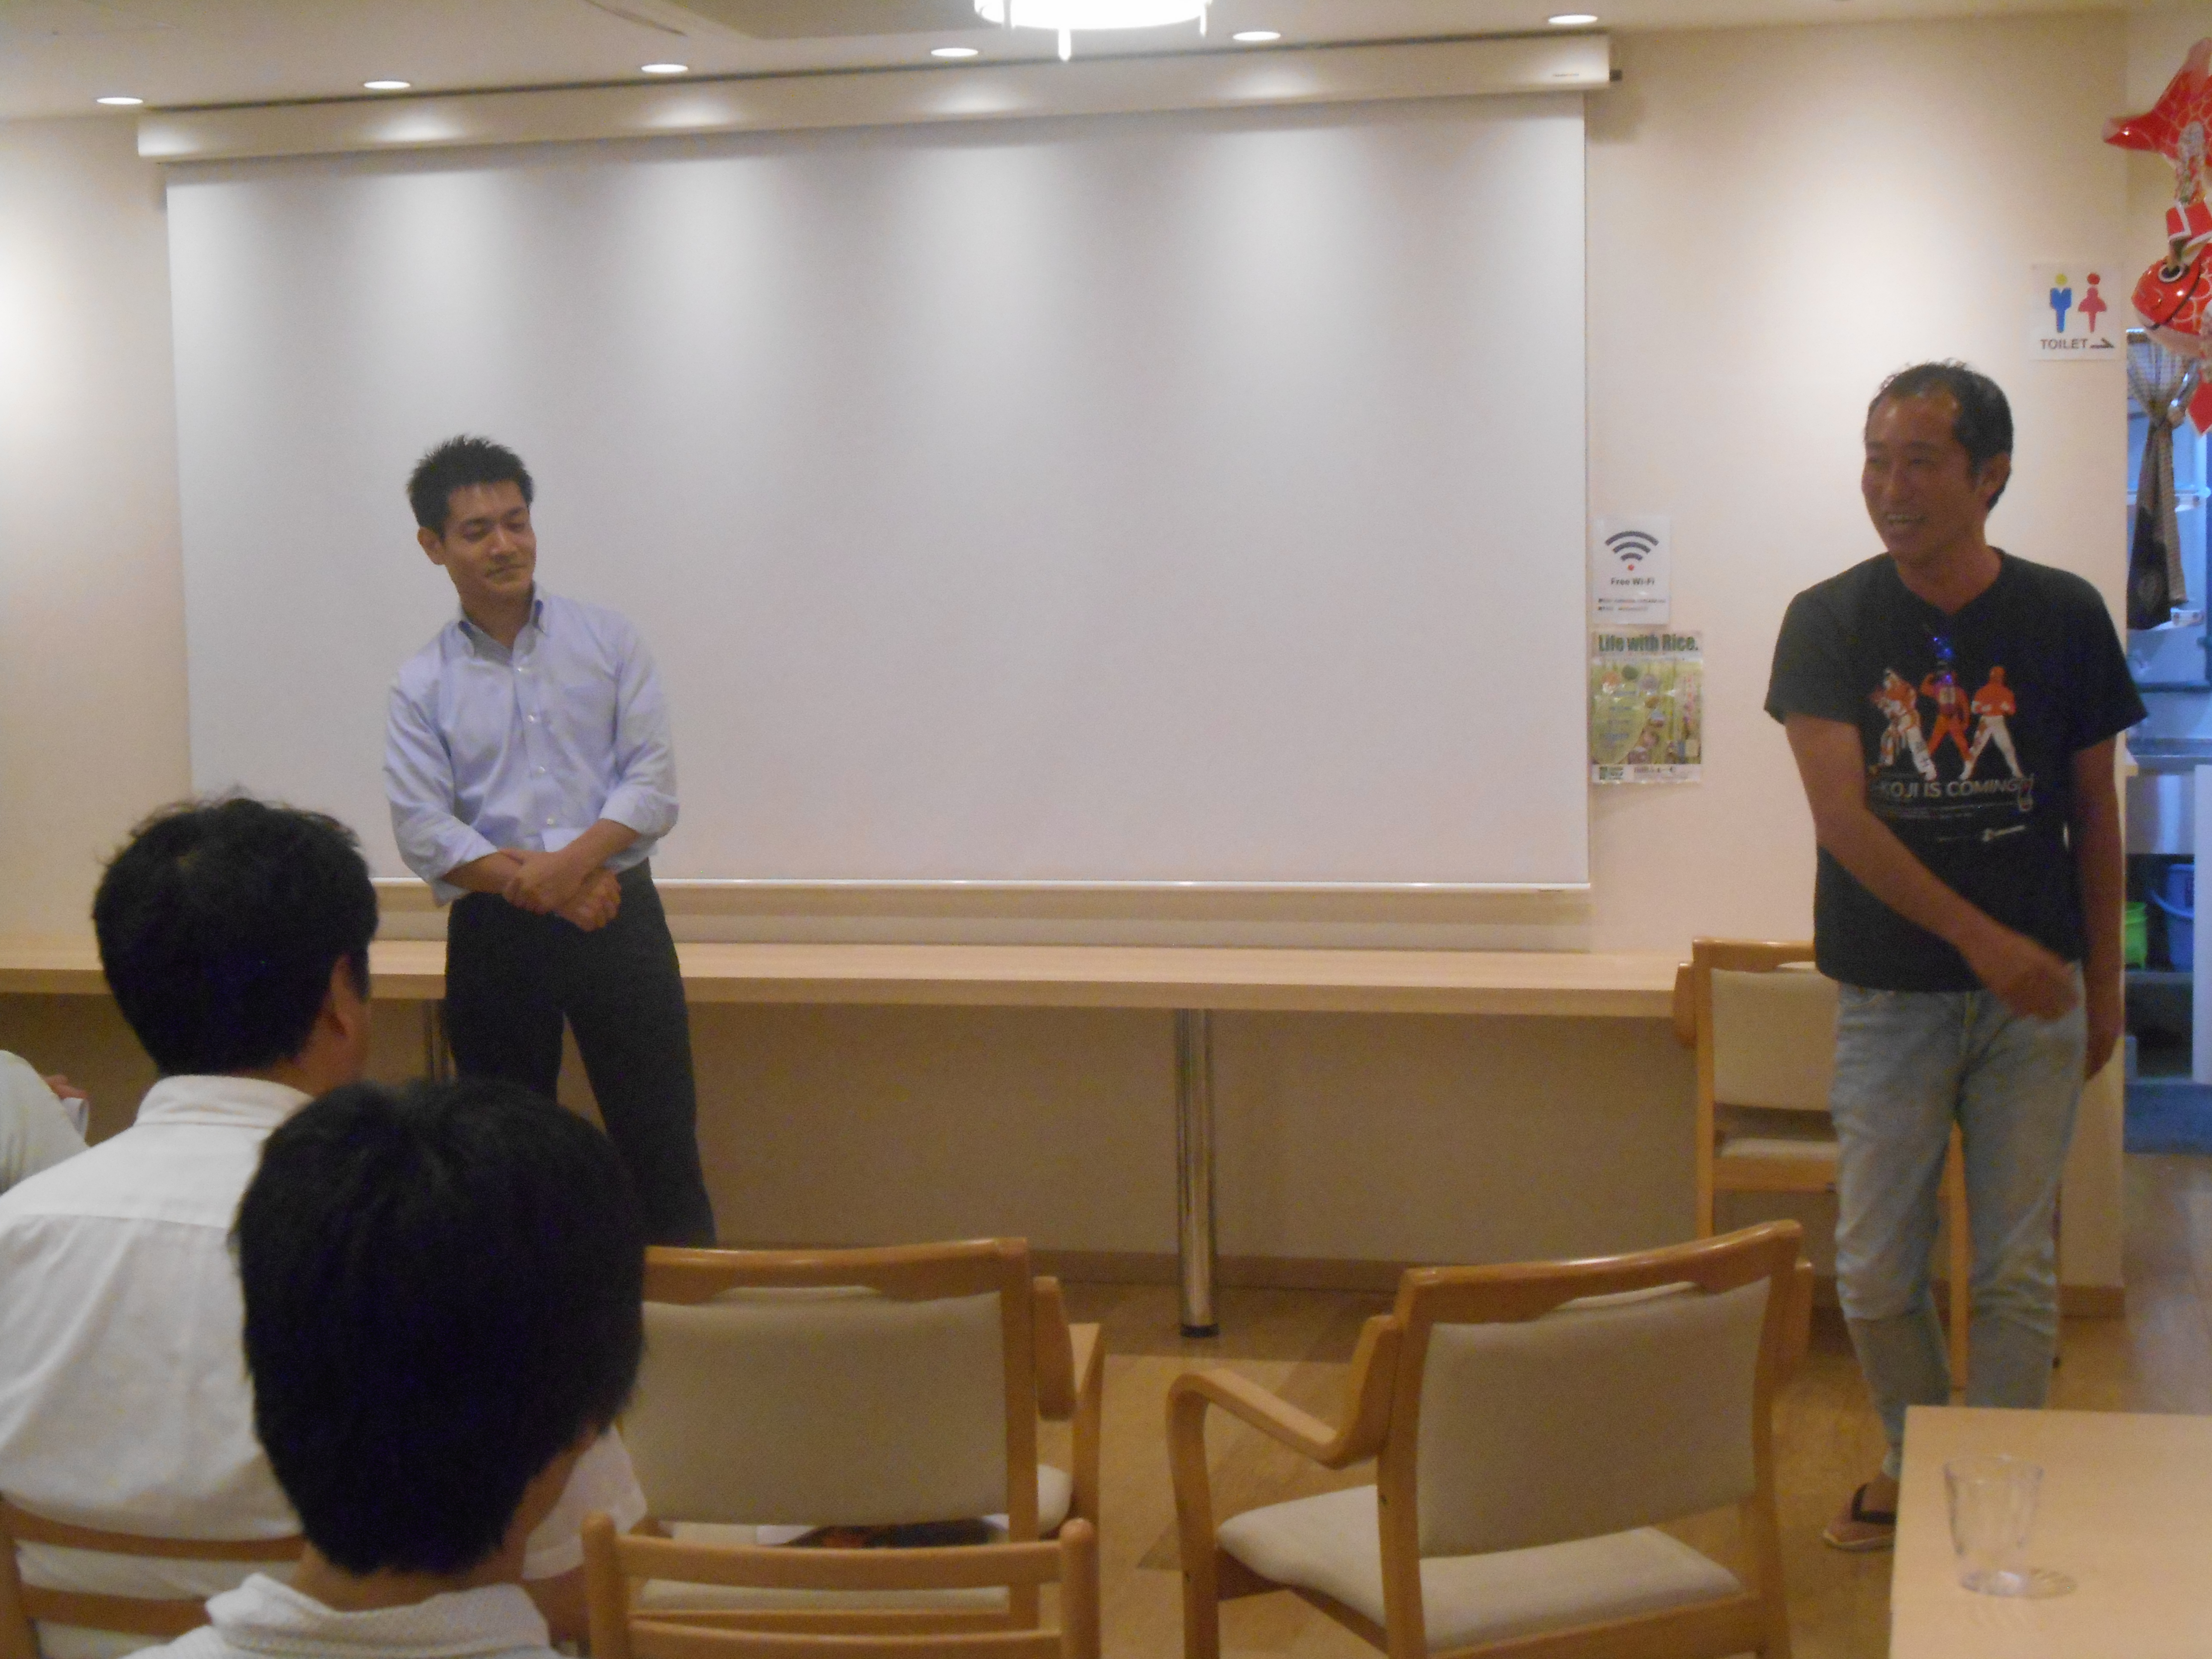 DSCN1897 - AoMoLink〜赤坂〜の第2回勉強会&交流会開催します。